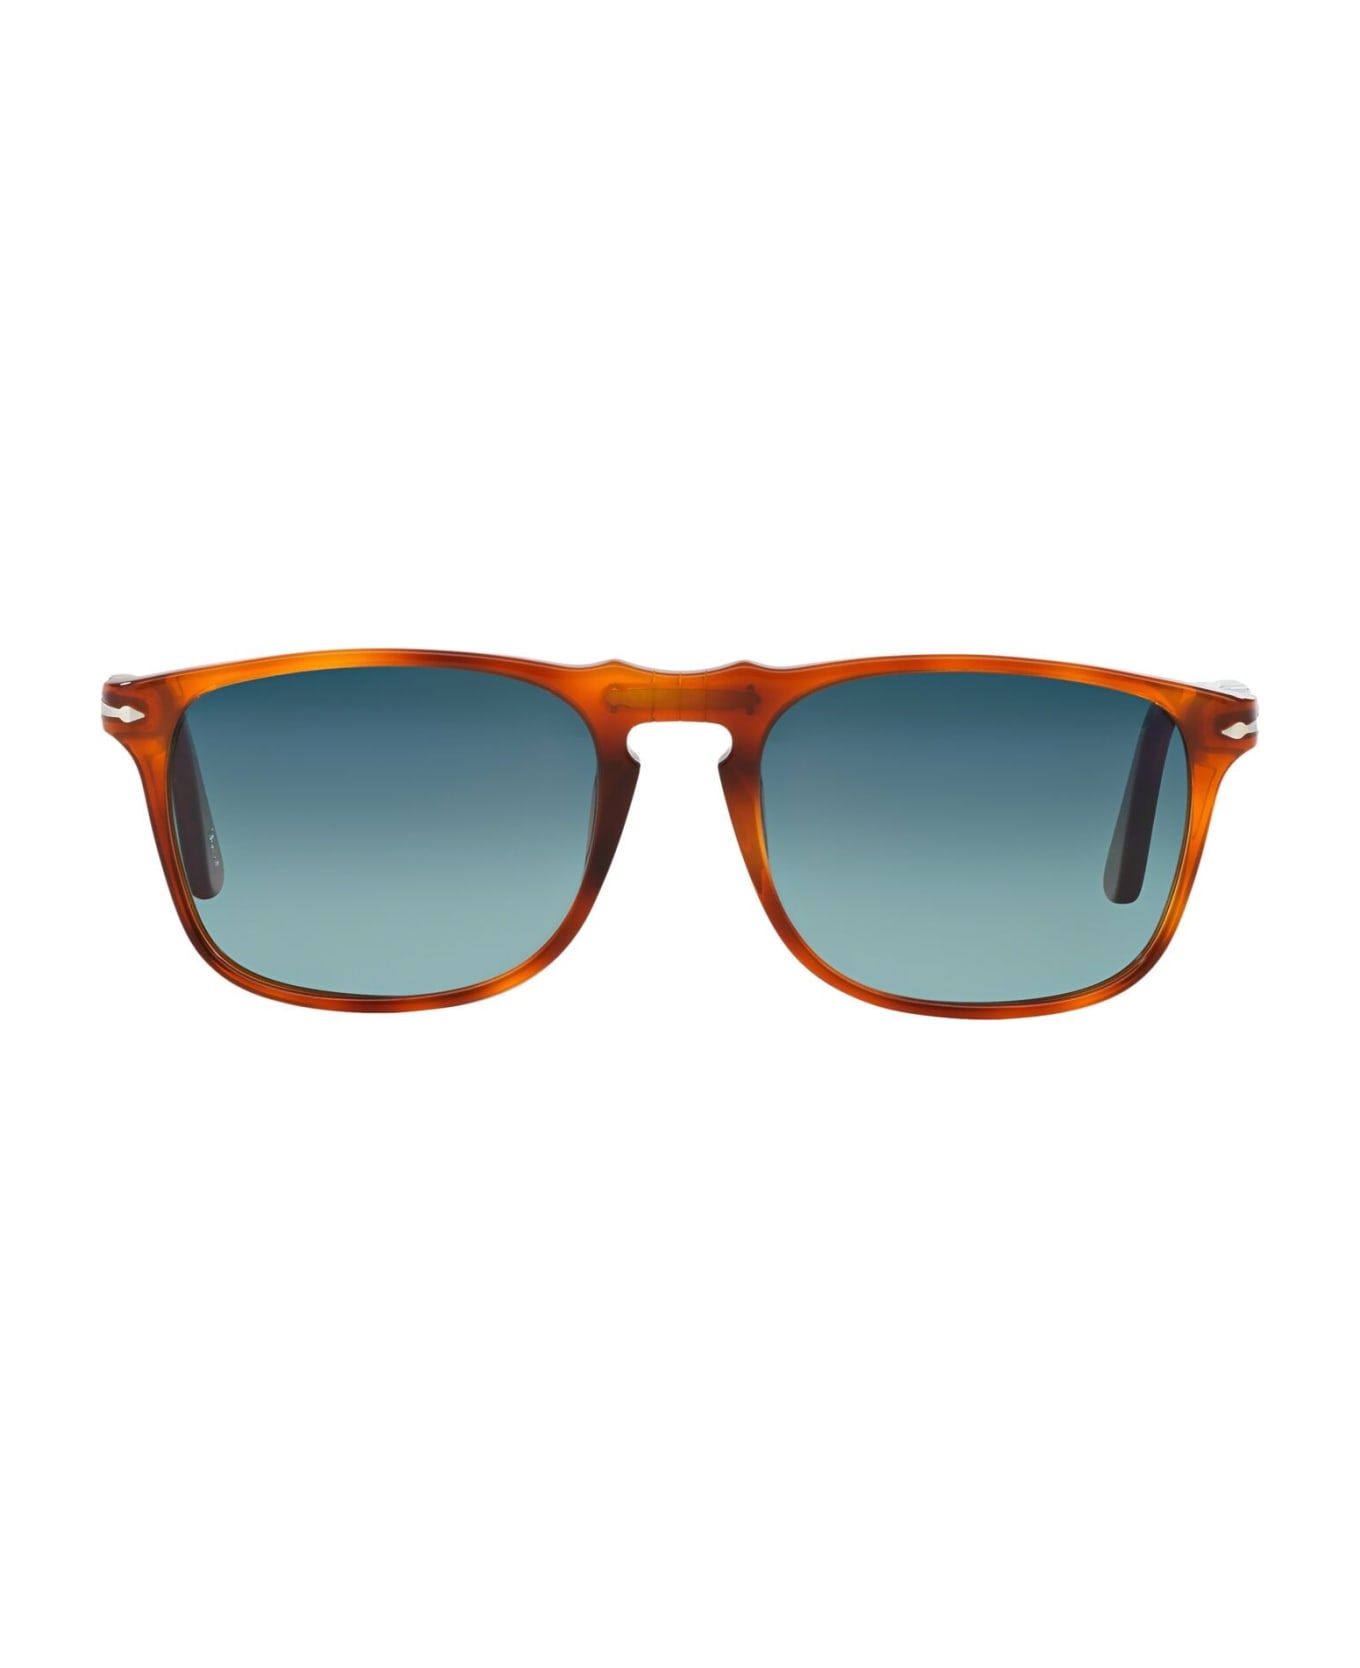 Persol Eyewear - Terra di Siena/Blu Sfumato polarizzato